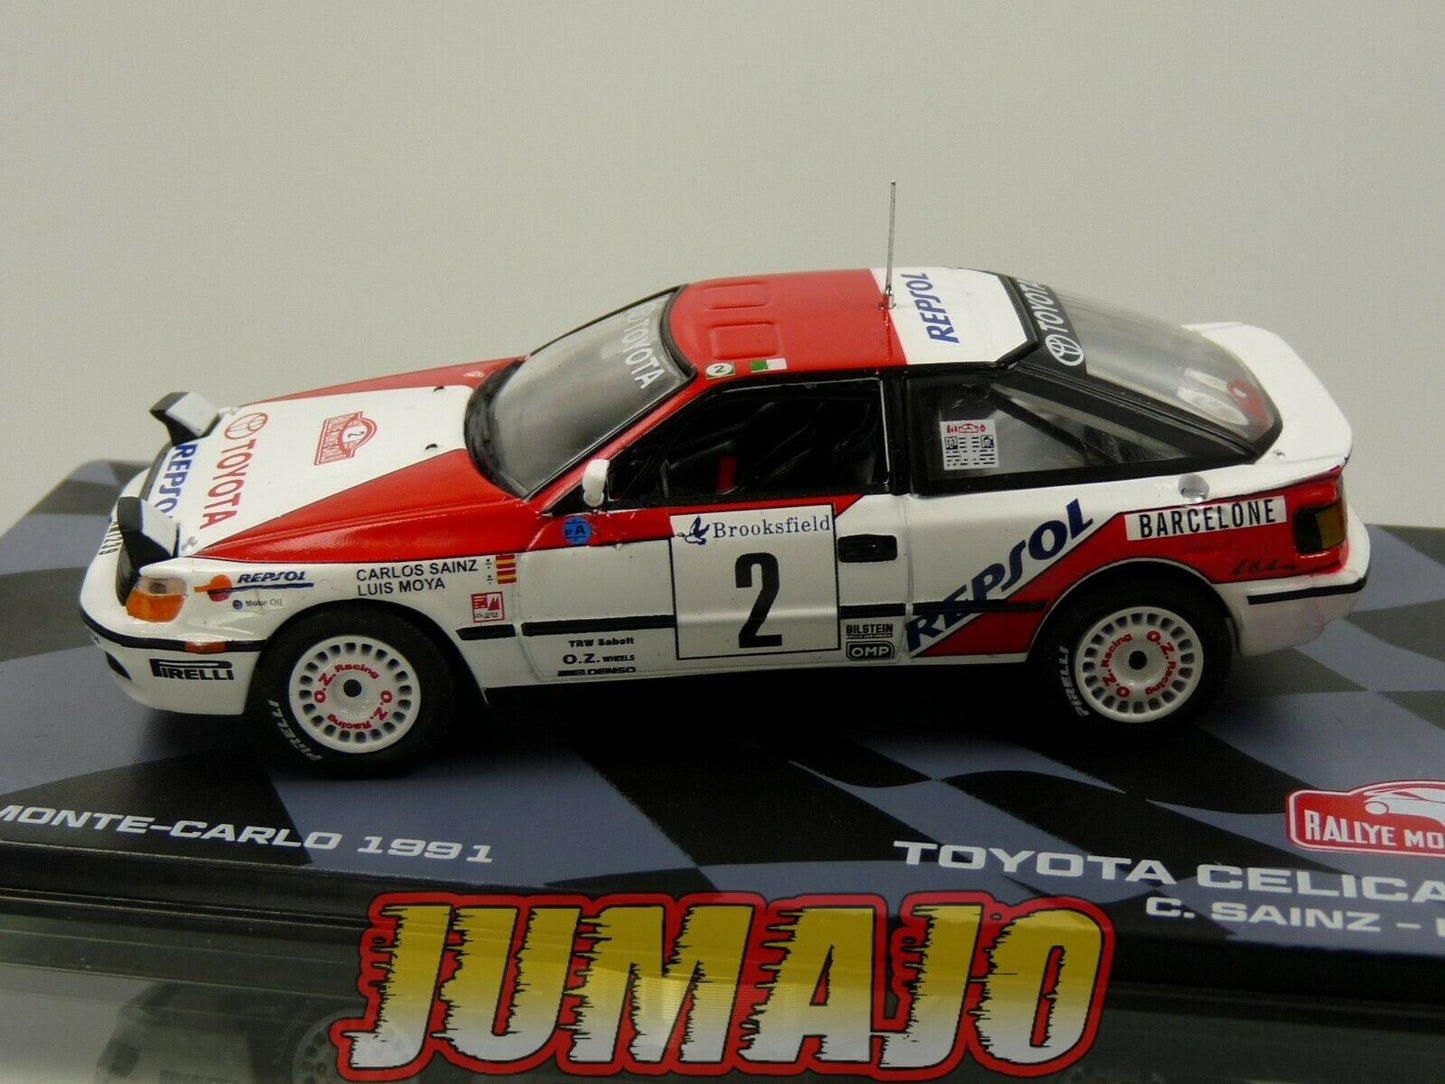 RMIT43 1/43 IXO Rallye Monte Carlo 1991 : TOYOTA Celica GT-4 C.Sainz #2